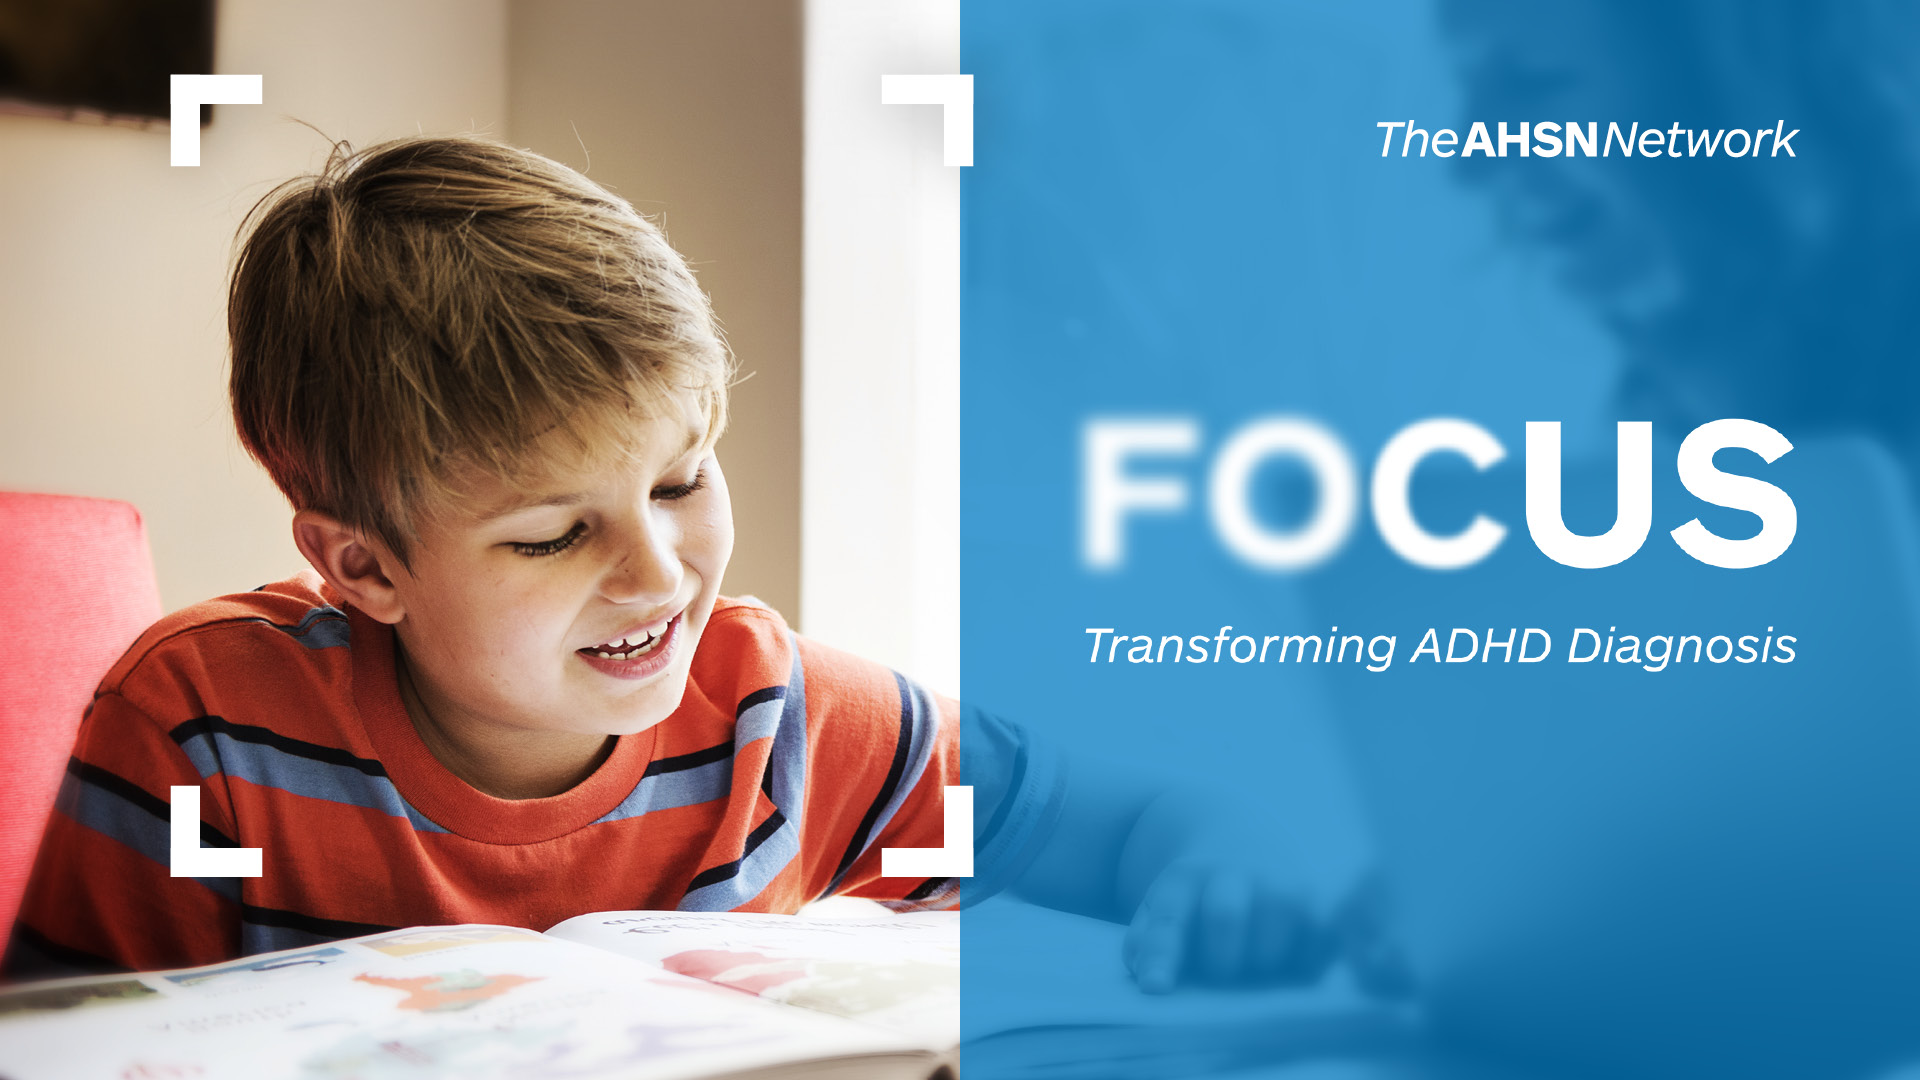 FOCUS, Transforming ADHD Diagnosis